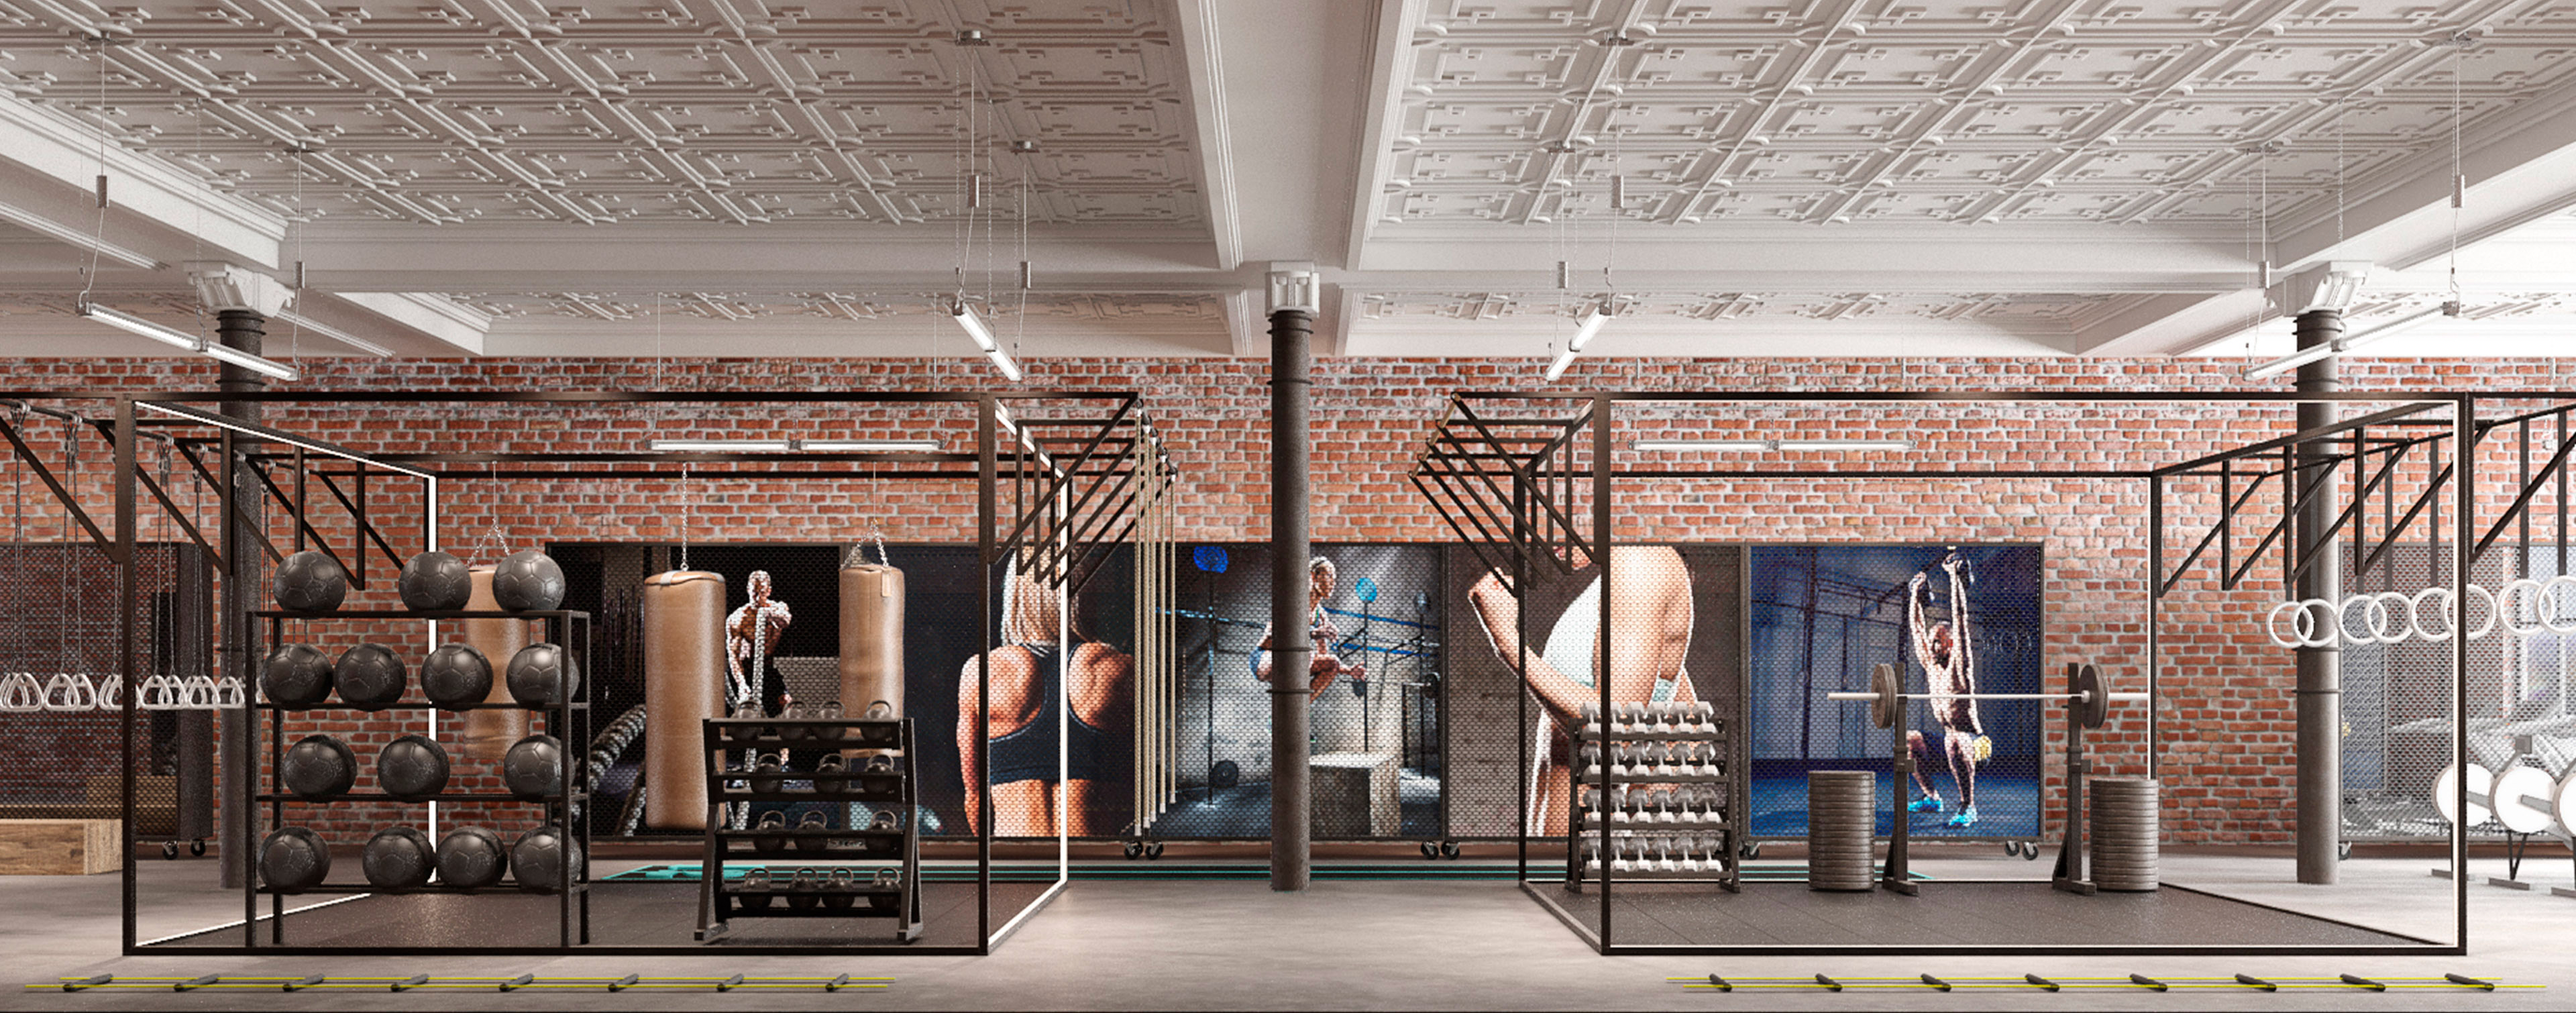 luv studio luxury architects new york fit house gym IMG 01 - LUV Studio - Arquitectura y diseño - Barcelona